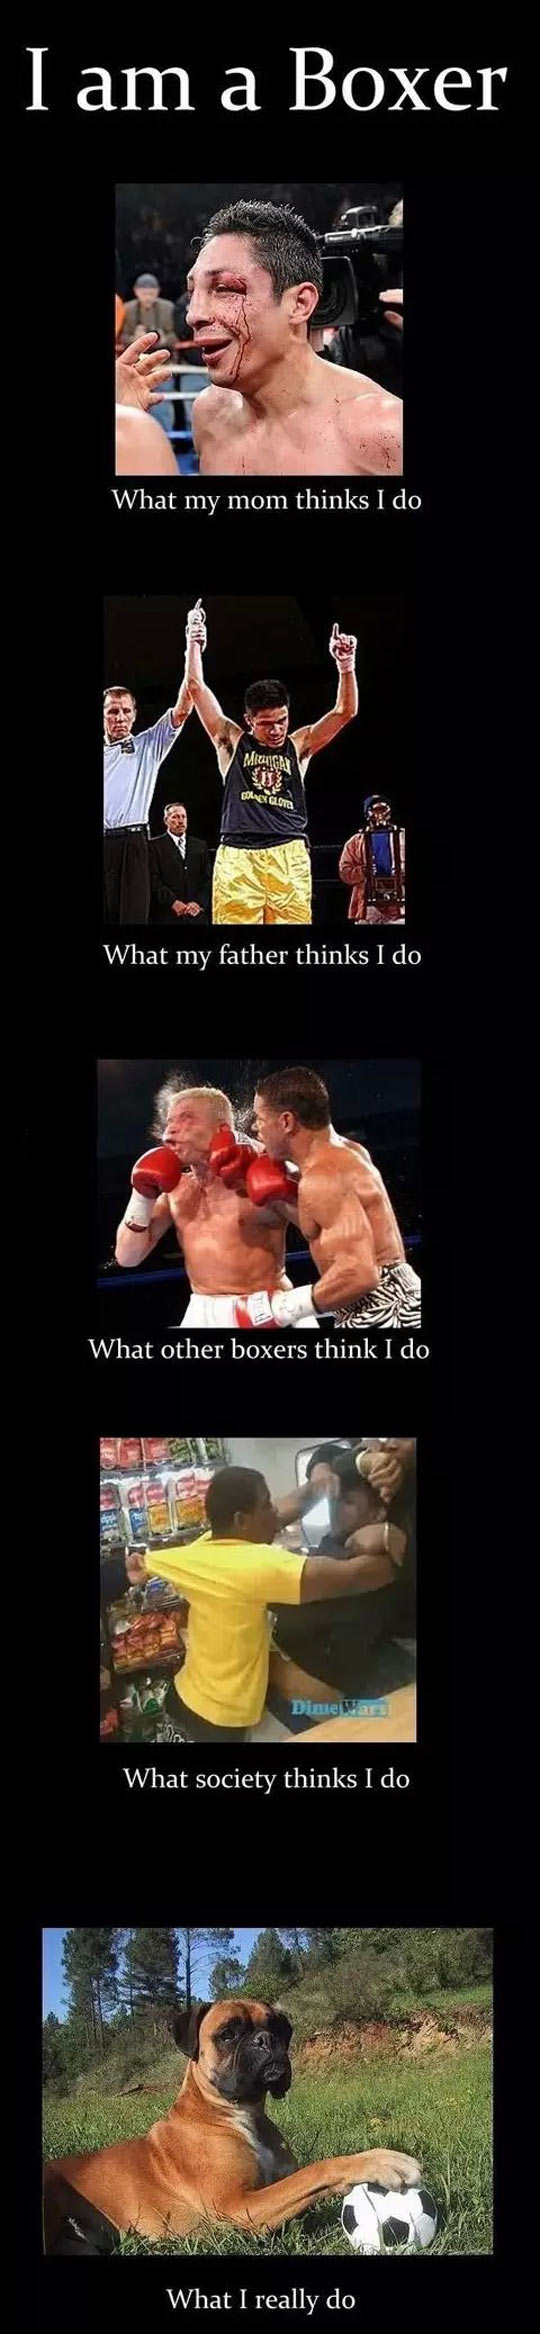 A Boxer